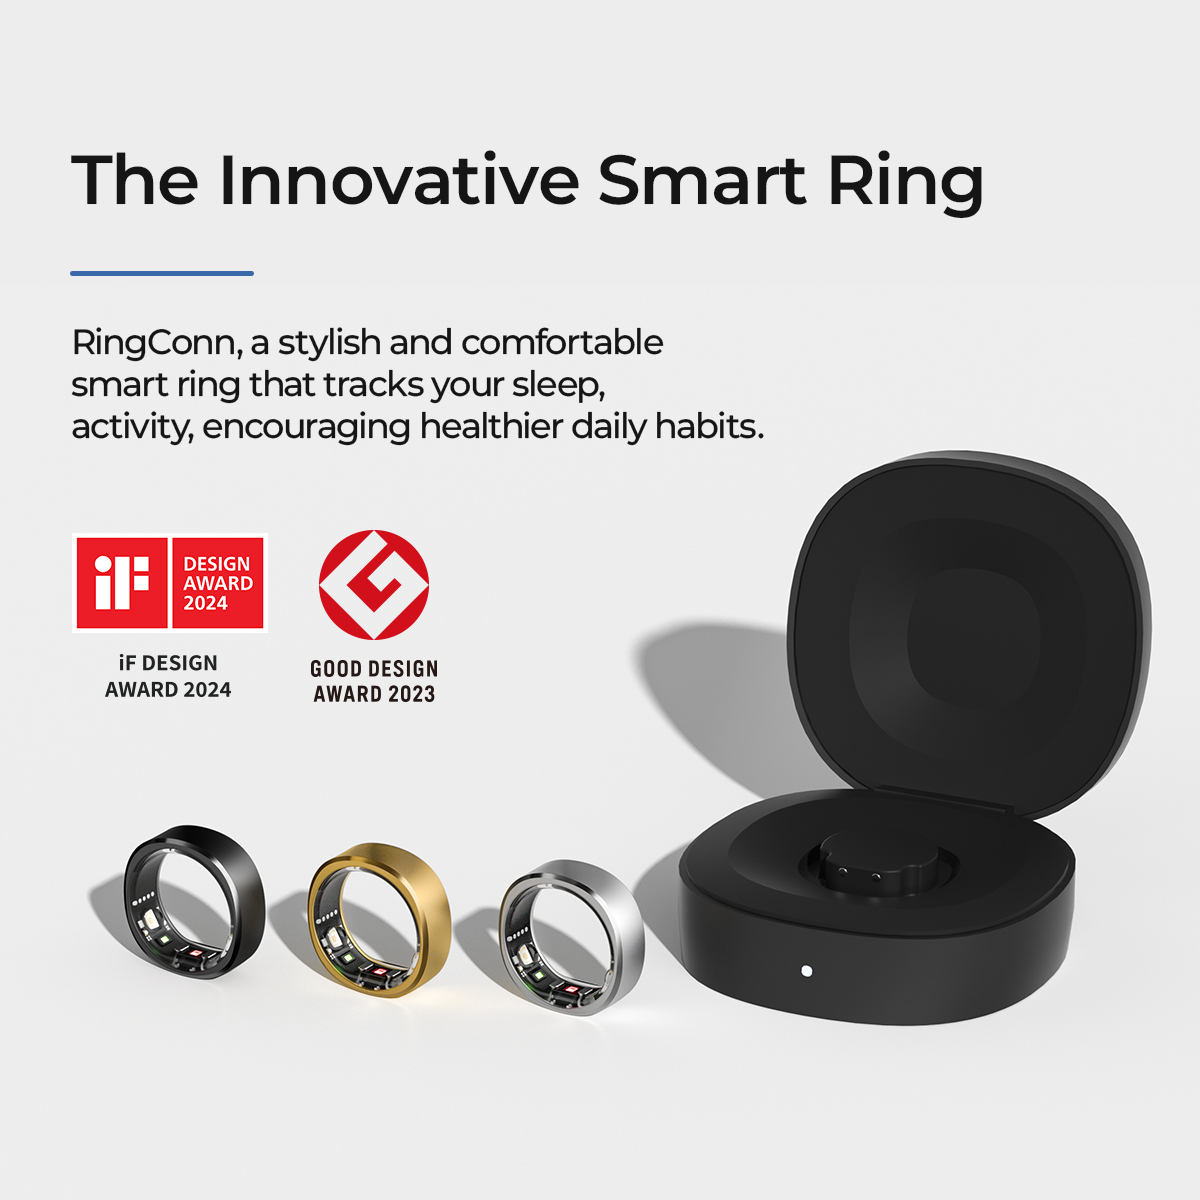 ringconn smart ring